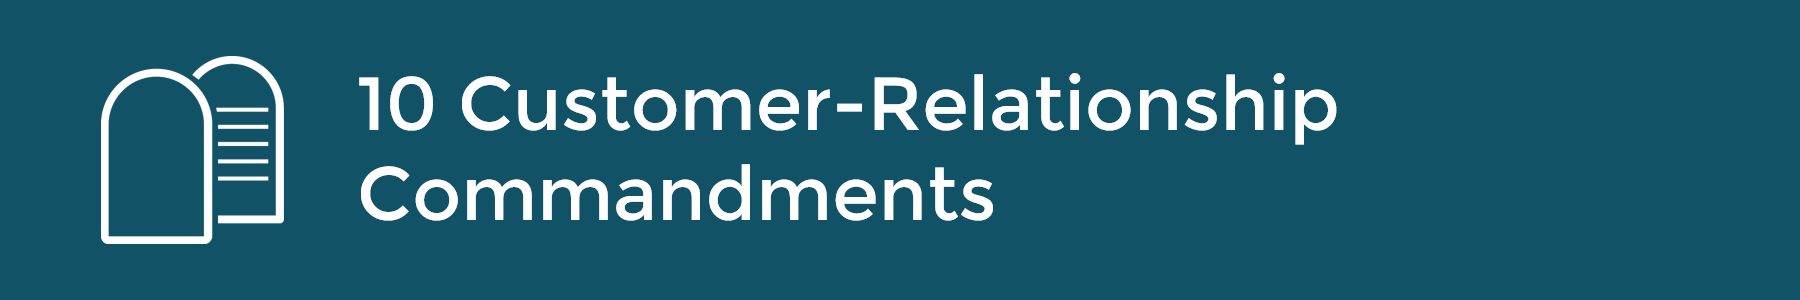 10 Customer-Relationship Commandments - Blog Header Image